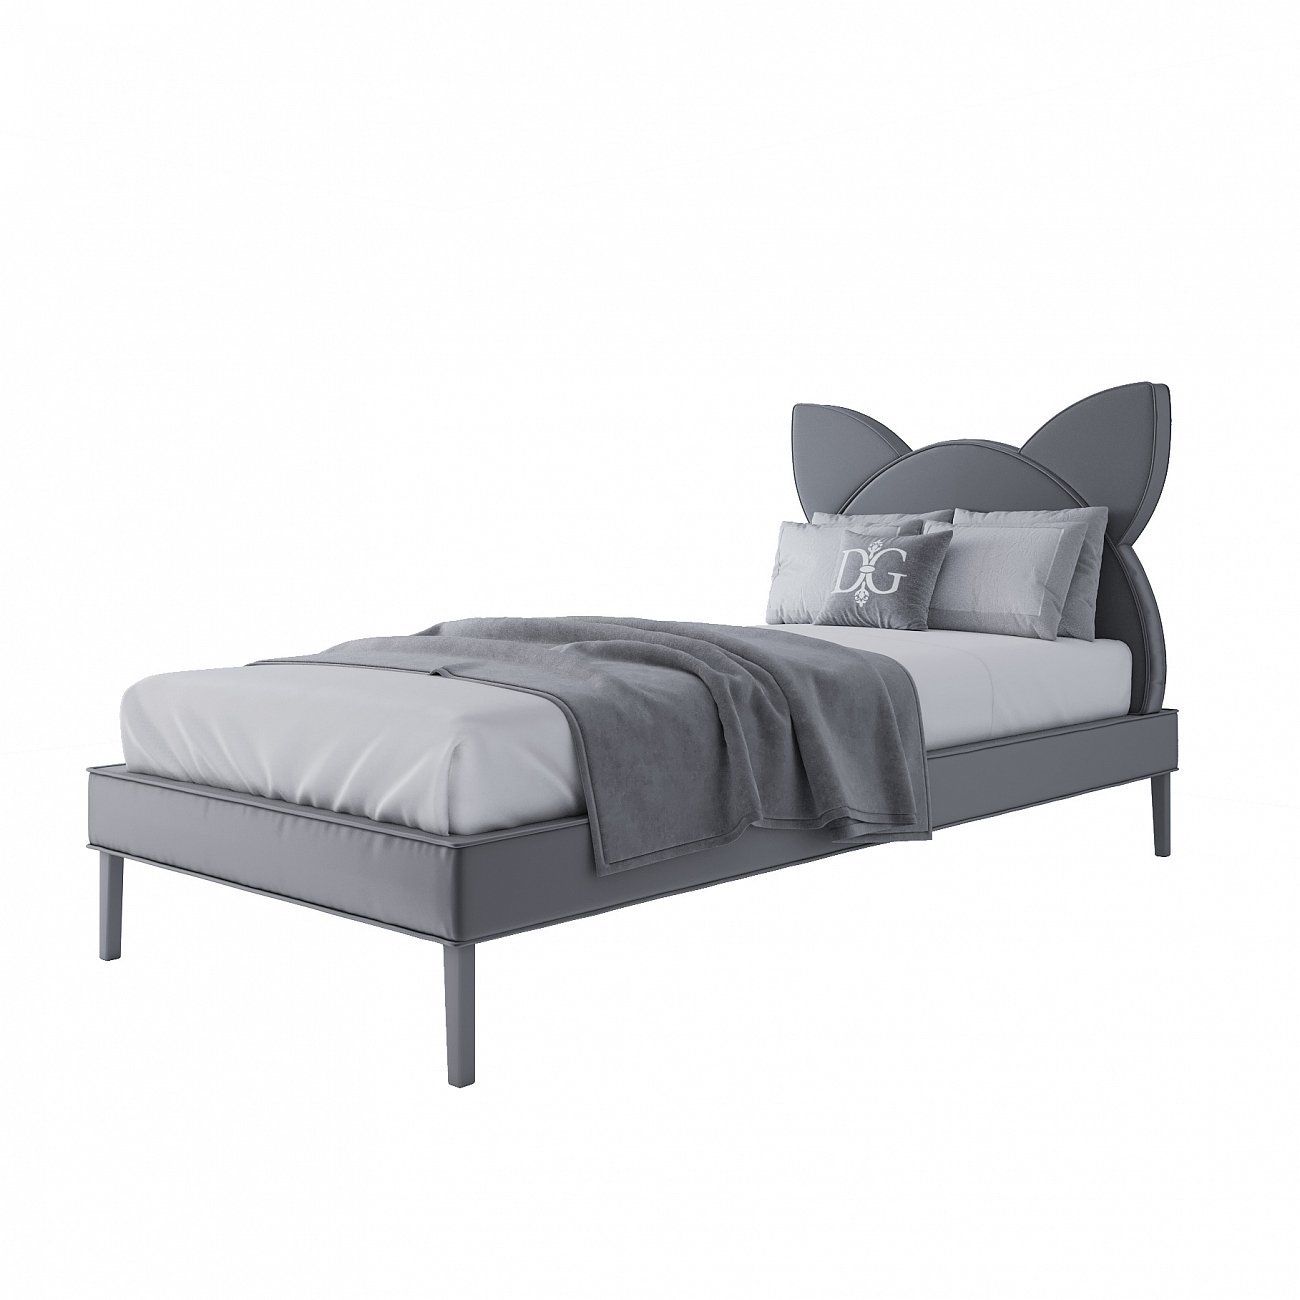 Kitty single bed for children 90x200 cm gray